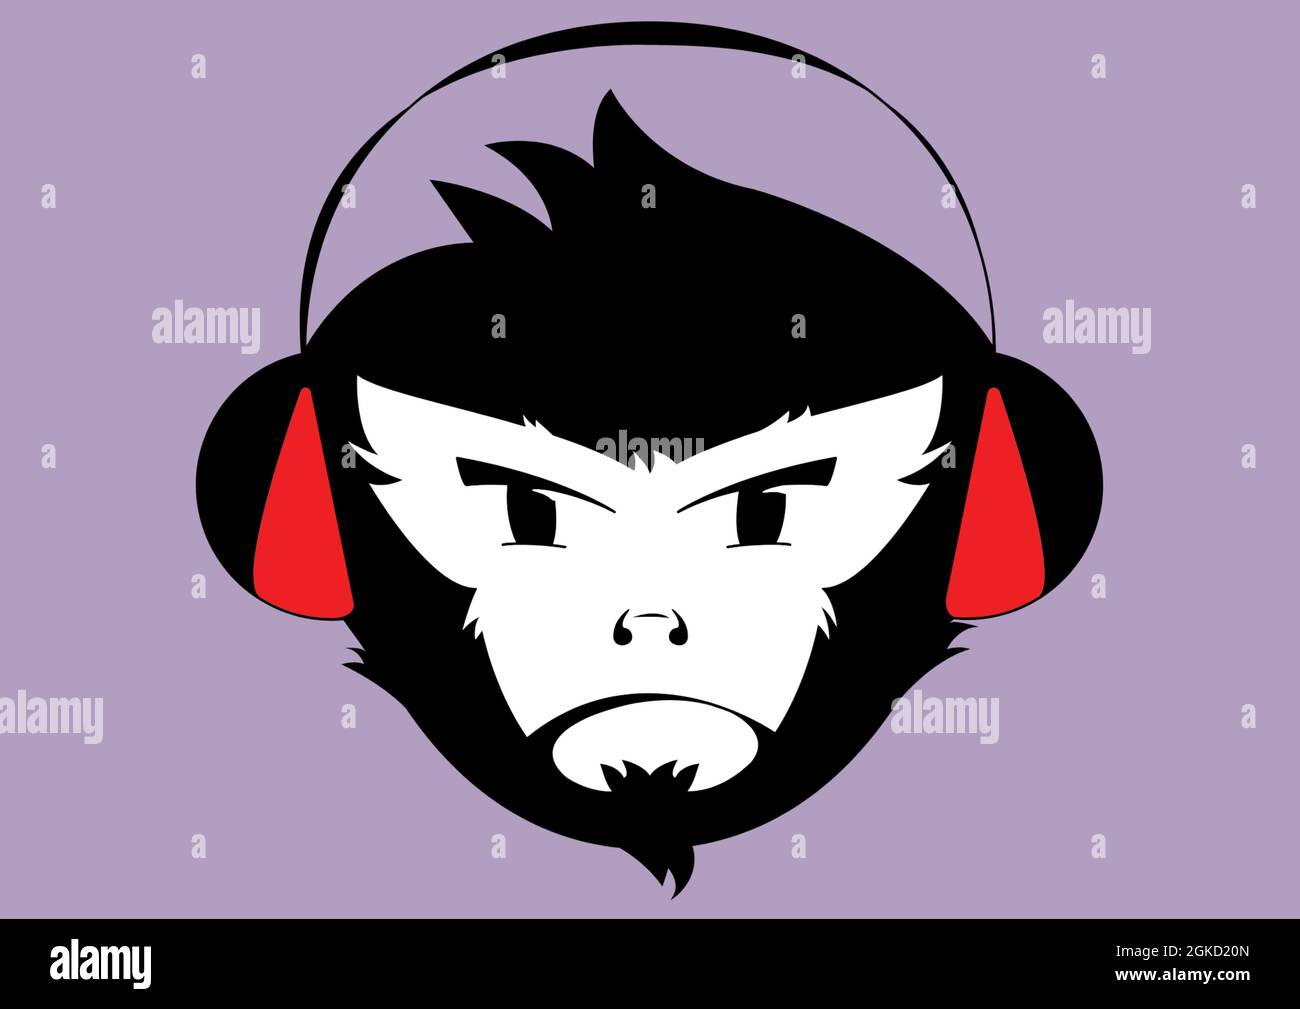 Digitally generated image of monkey wearing headphones icon against purple background Stock Photo